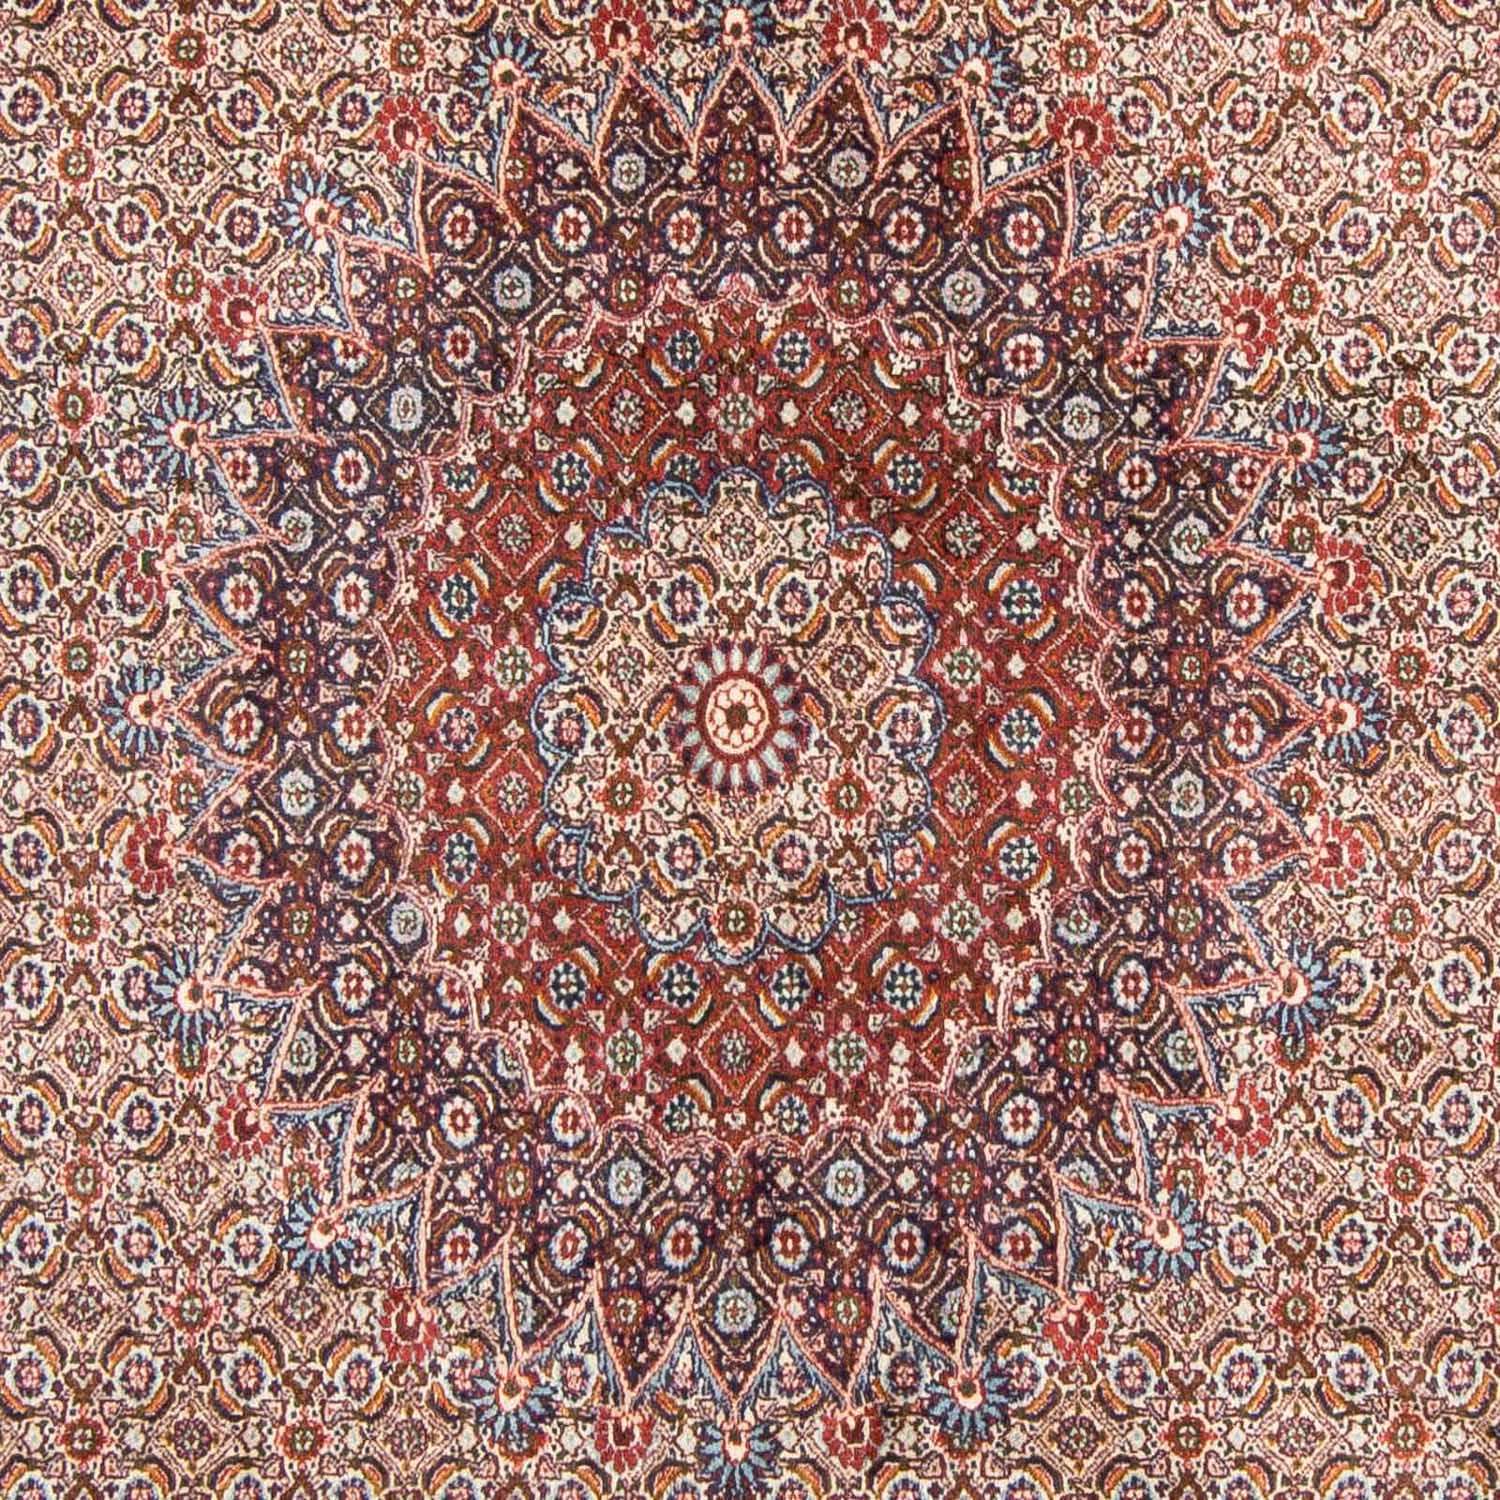 Tapis persan - Classique - 300 x 199 cm - rouge clair